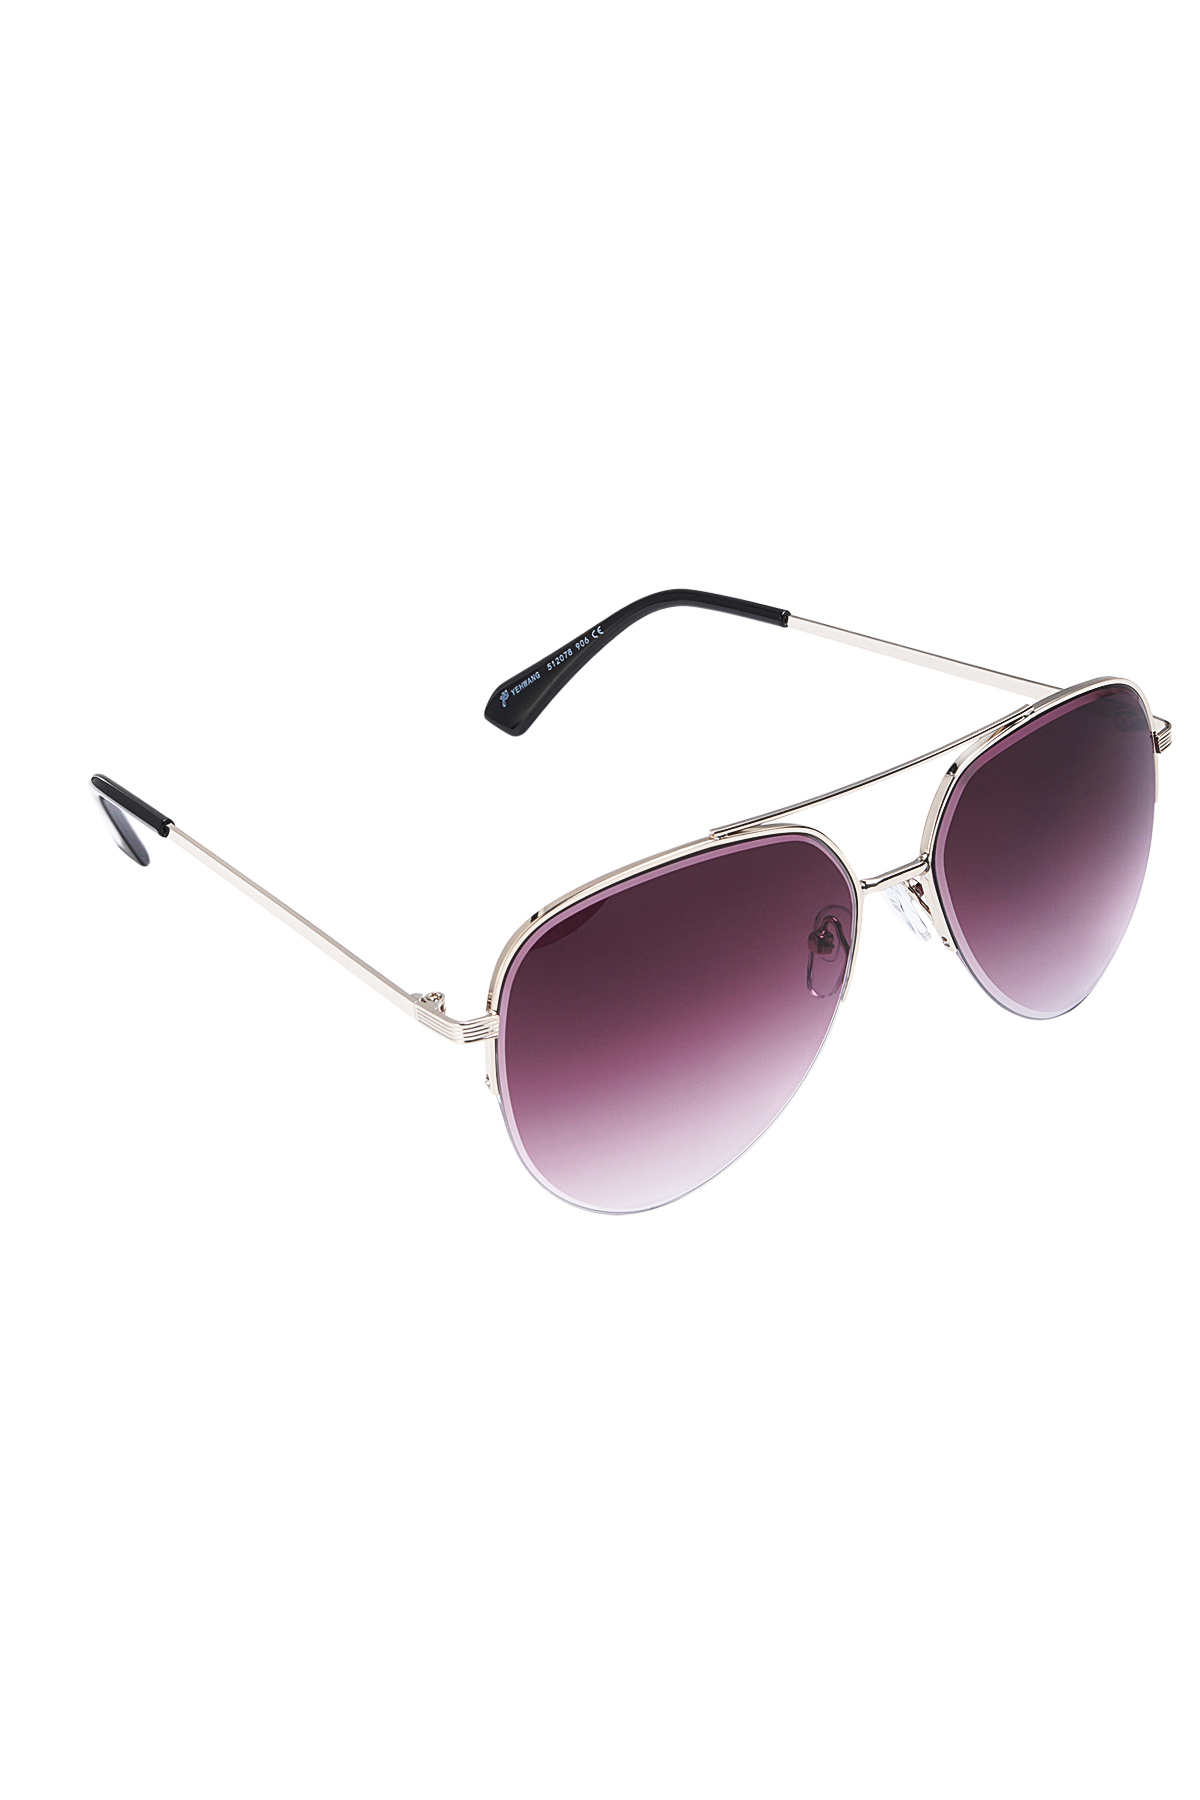 Aviator style sunglasses - purple